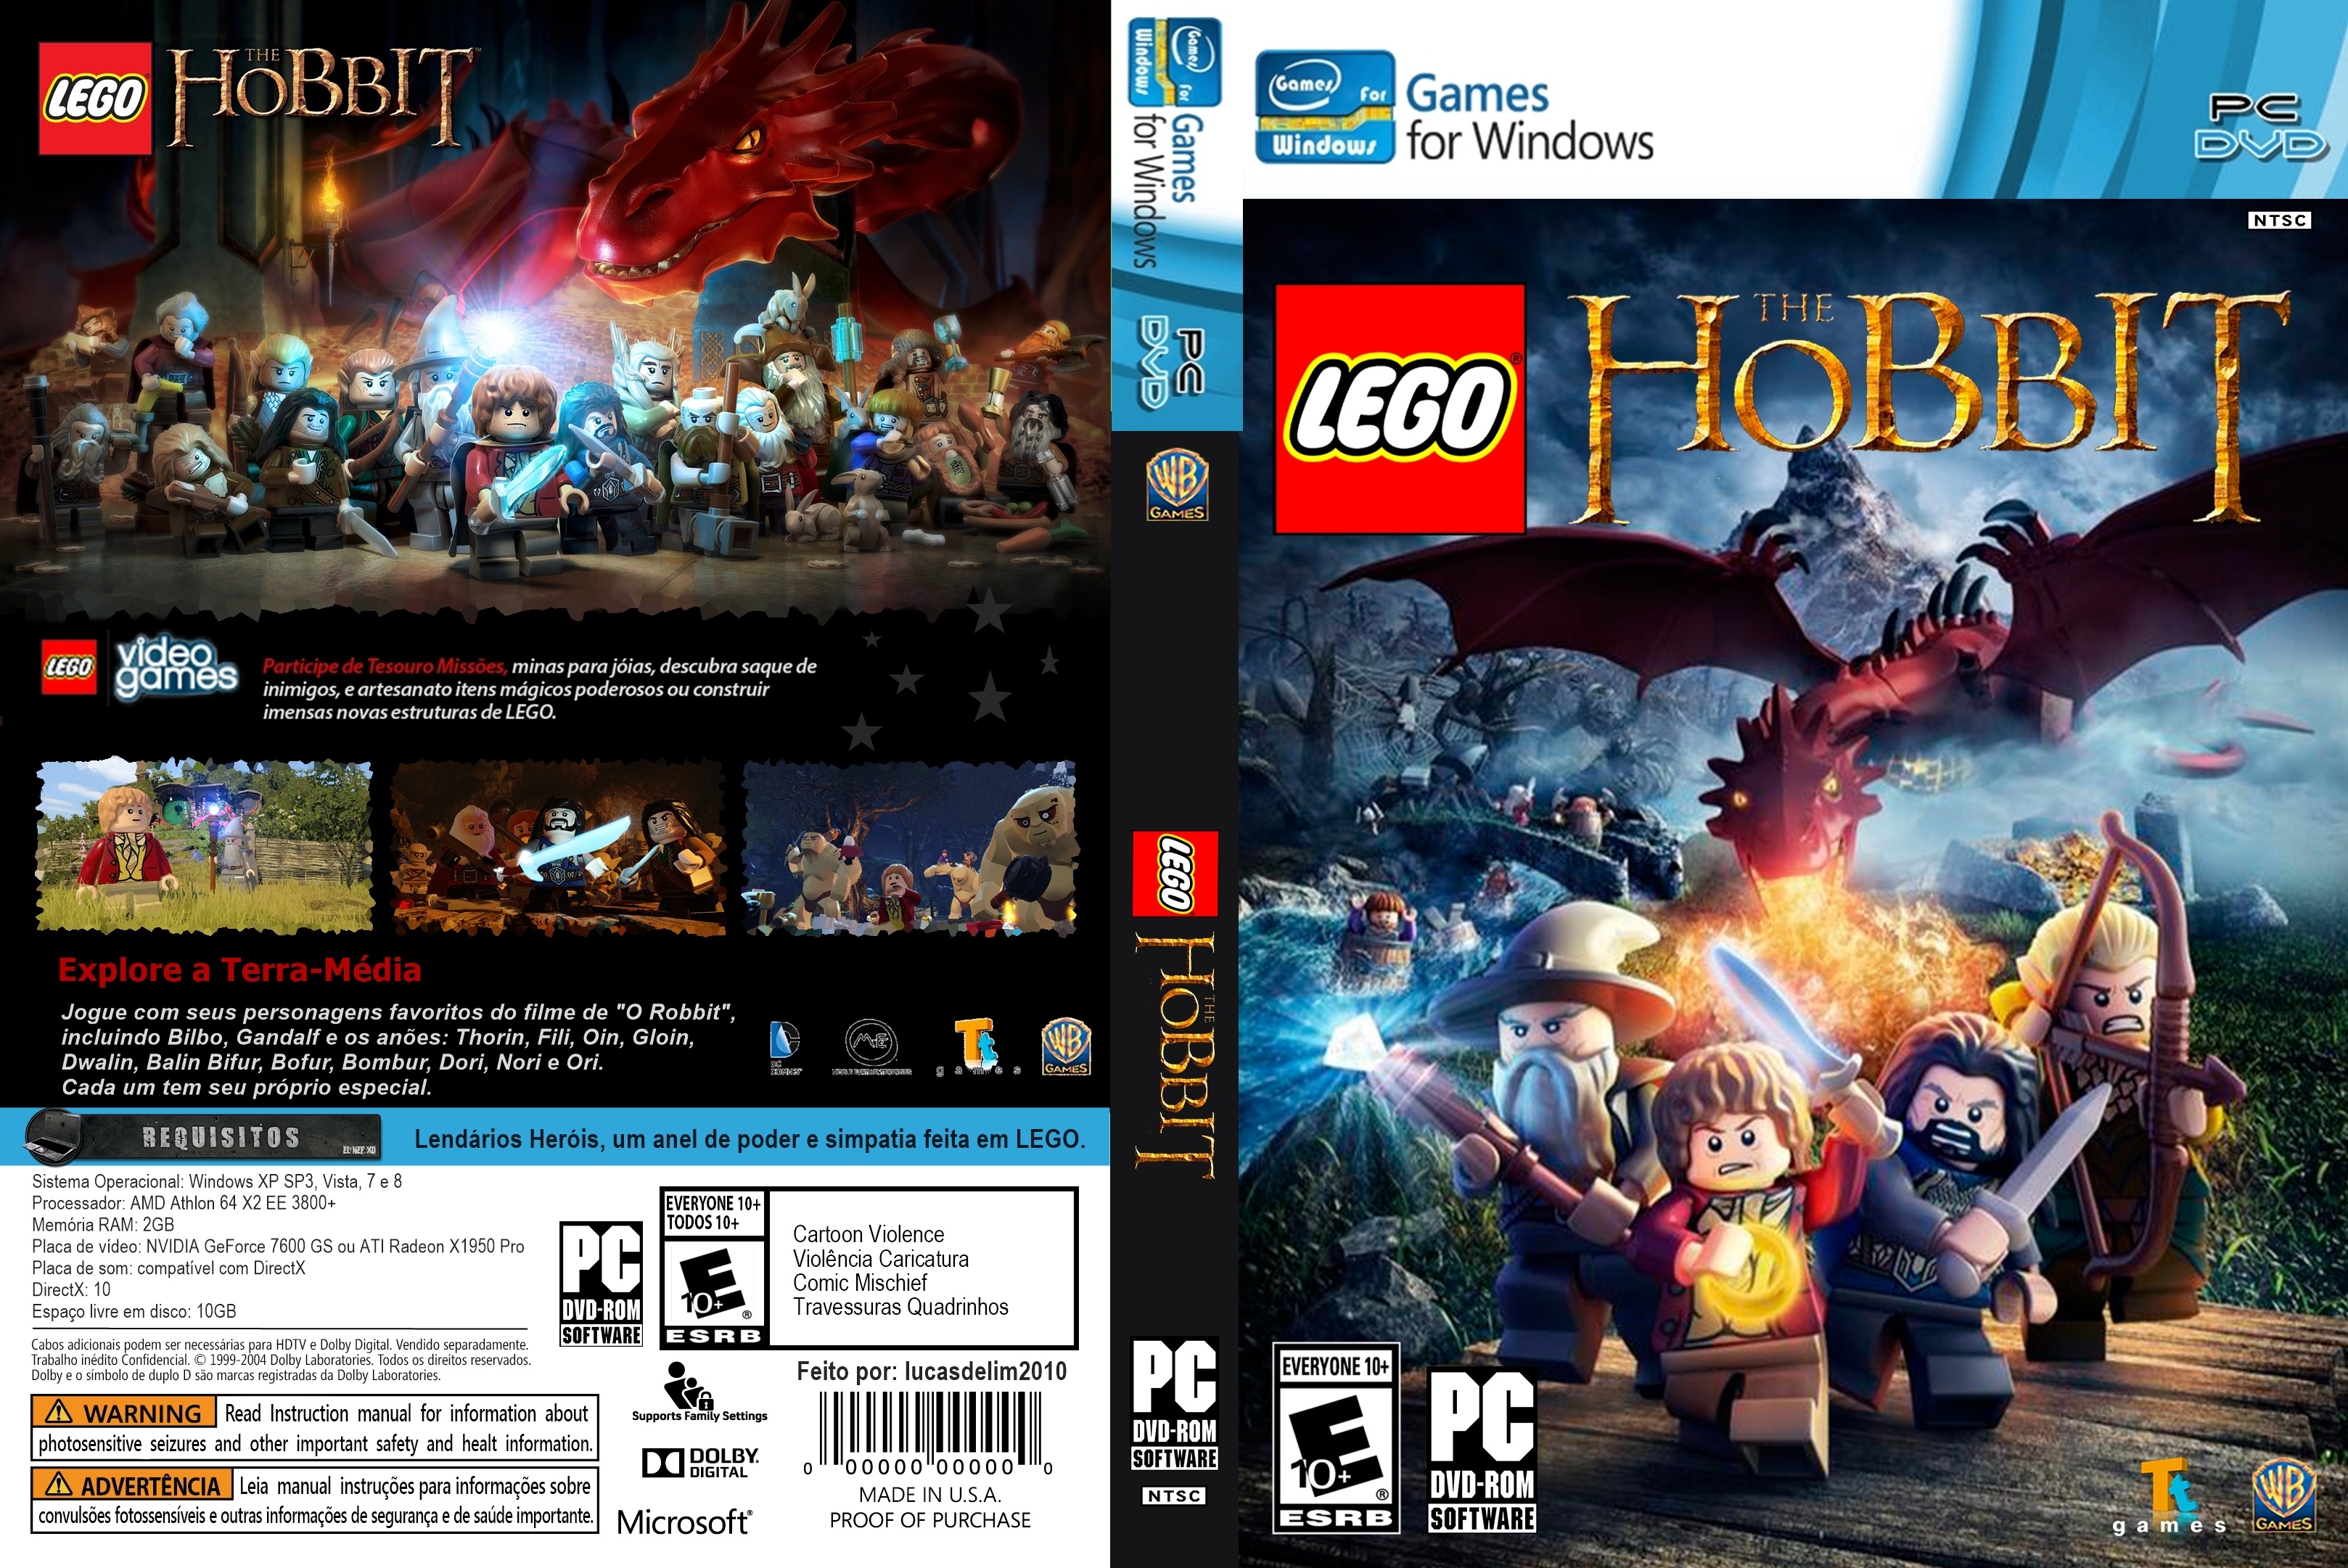 LEGO: The Hobbit box cover